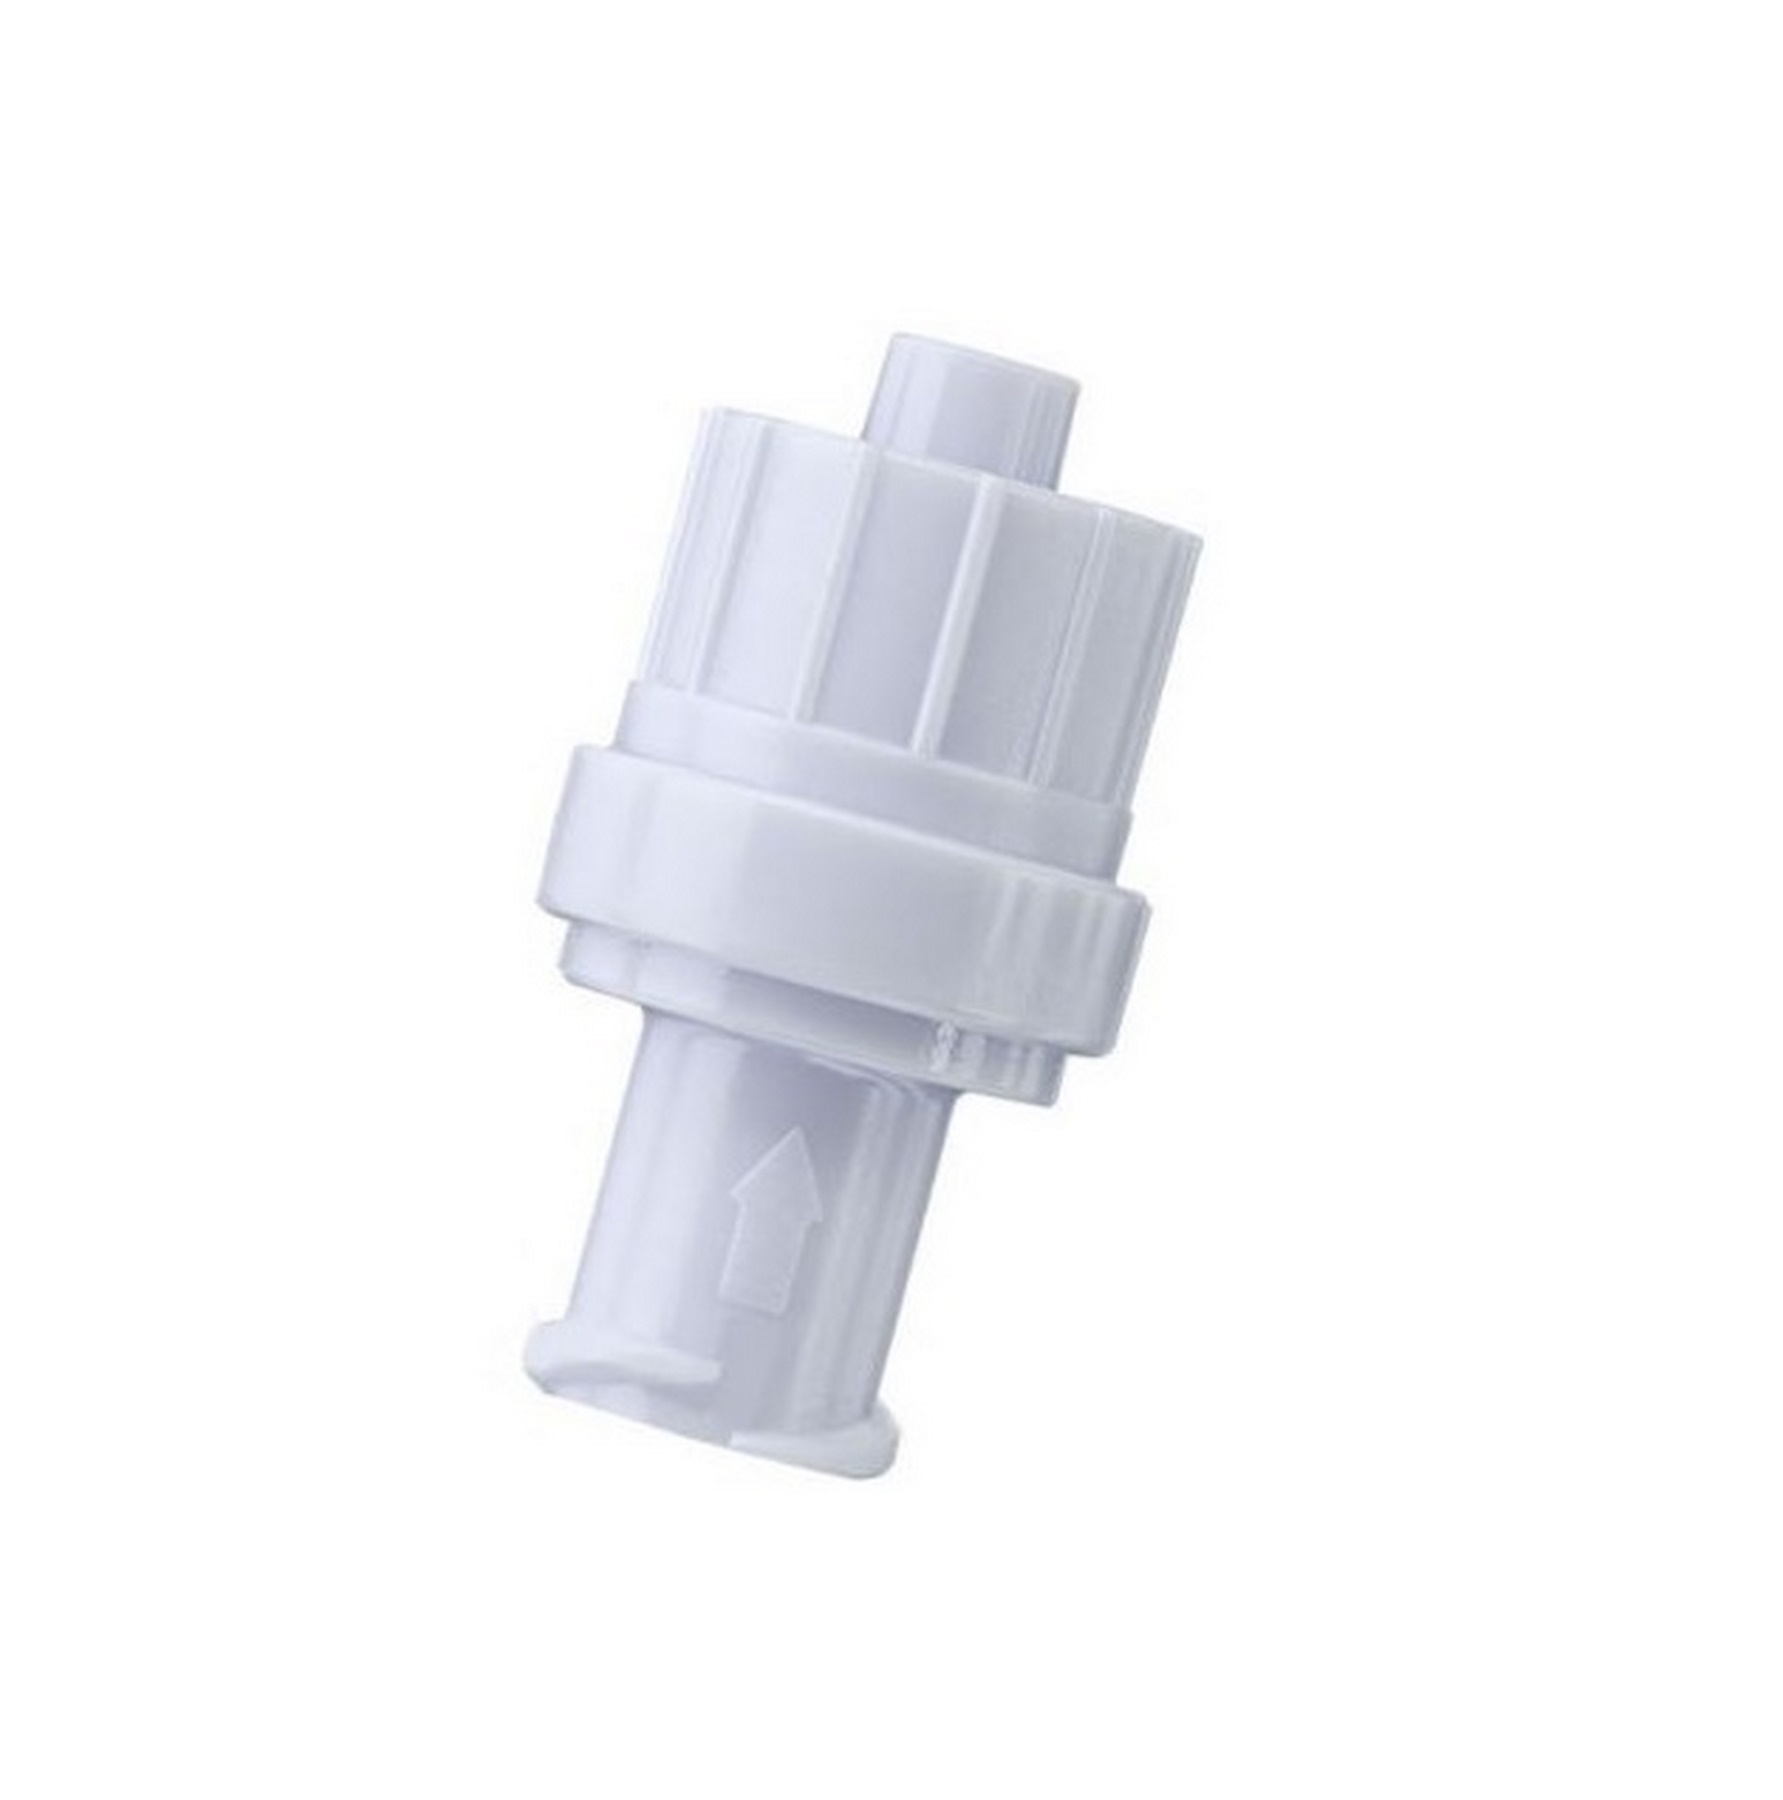 Fresenius Rückschlagventil / Rückflusssperre ohne Schutzkappe | Farbe: Weiß